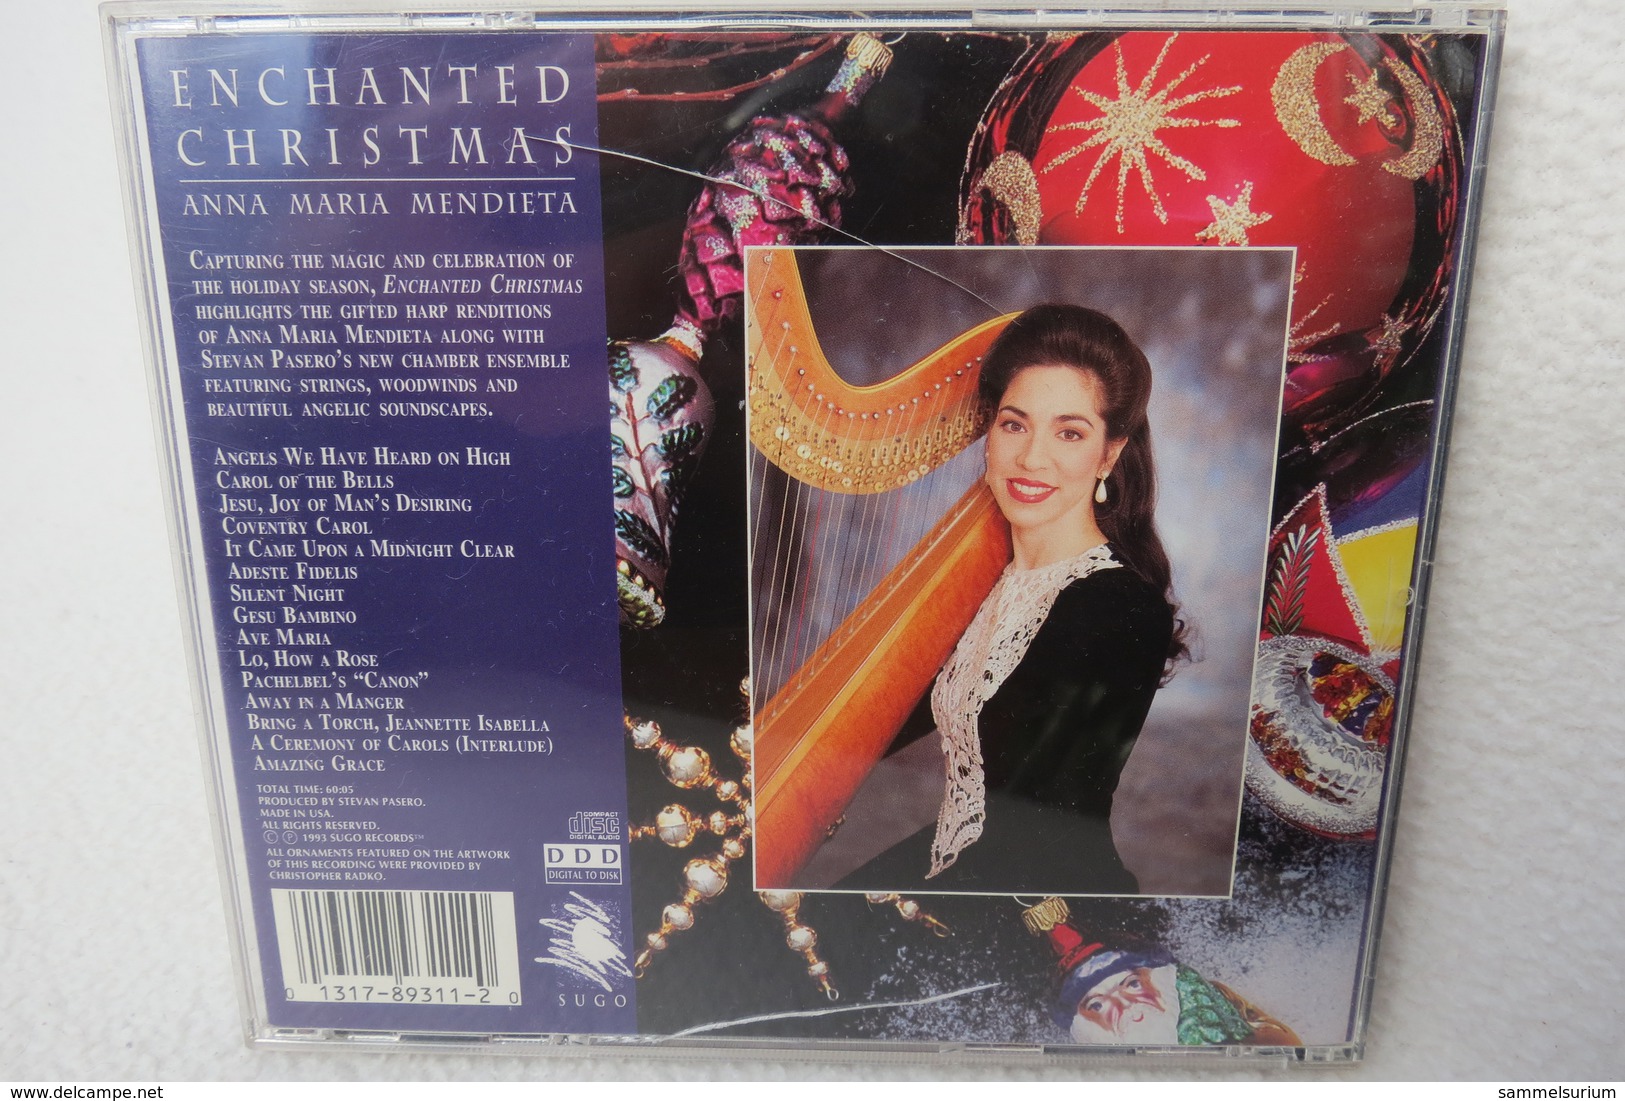 CD "Enchanted Christmas" Anna Maria Mendieta Harp & New Chamber Ensemble - Christmas Carols